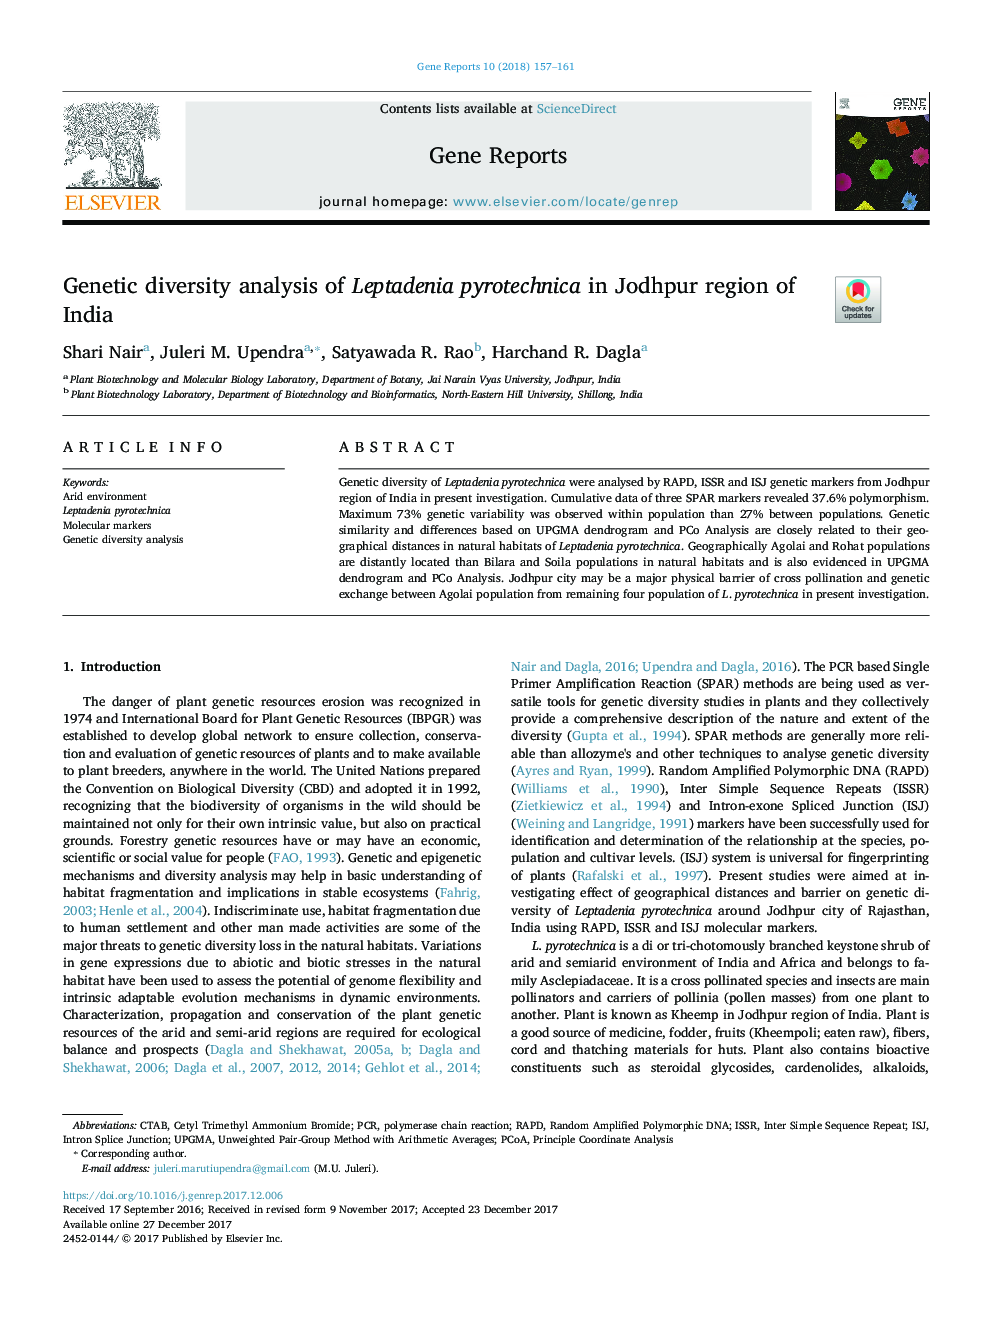 Genetic diversity analysis of Leptadenia pyrotechnica in Jodhpur region of India